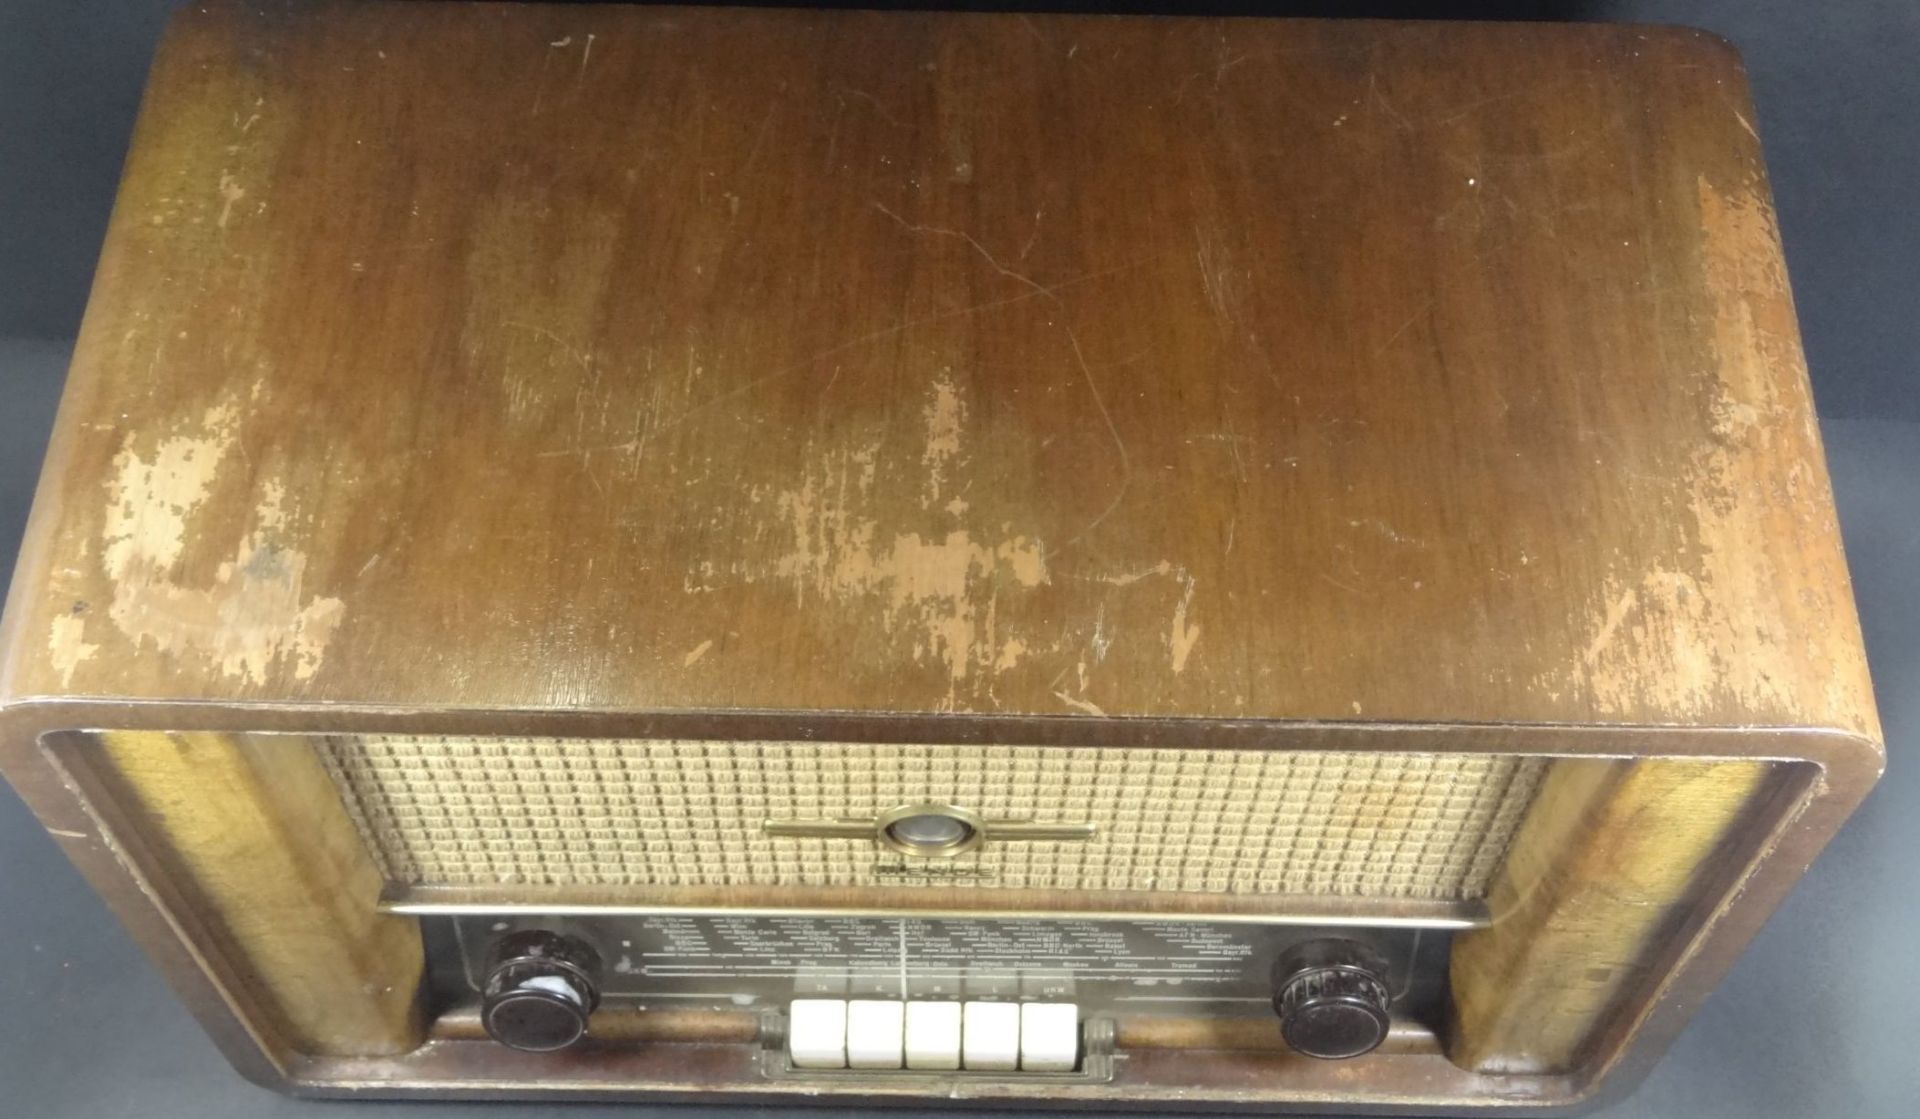 grosses Holzradio "Nordmende" Mod. Bremen, H-35 cm, B-50 cm - Bild 3 aus 6